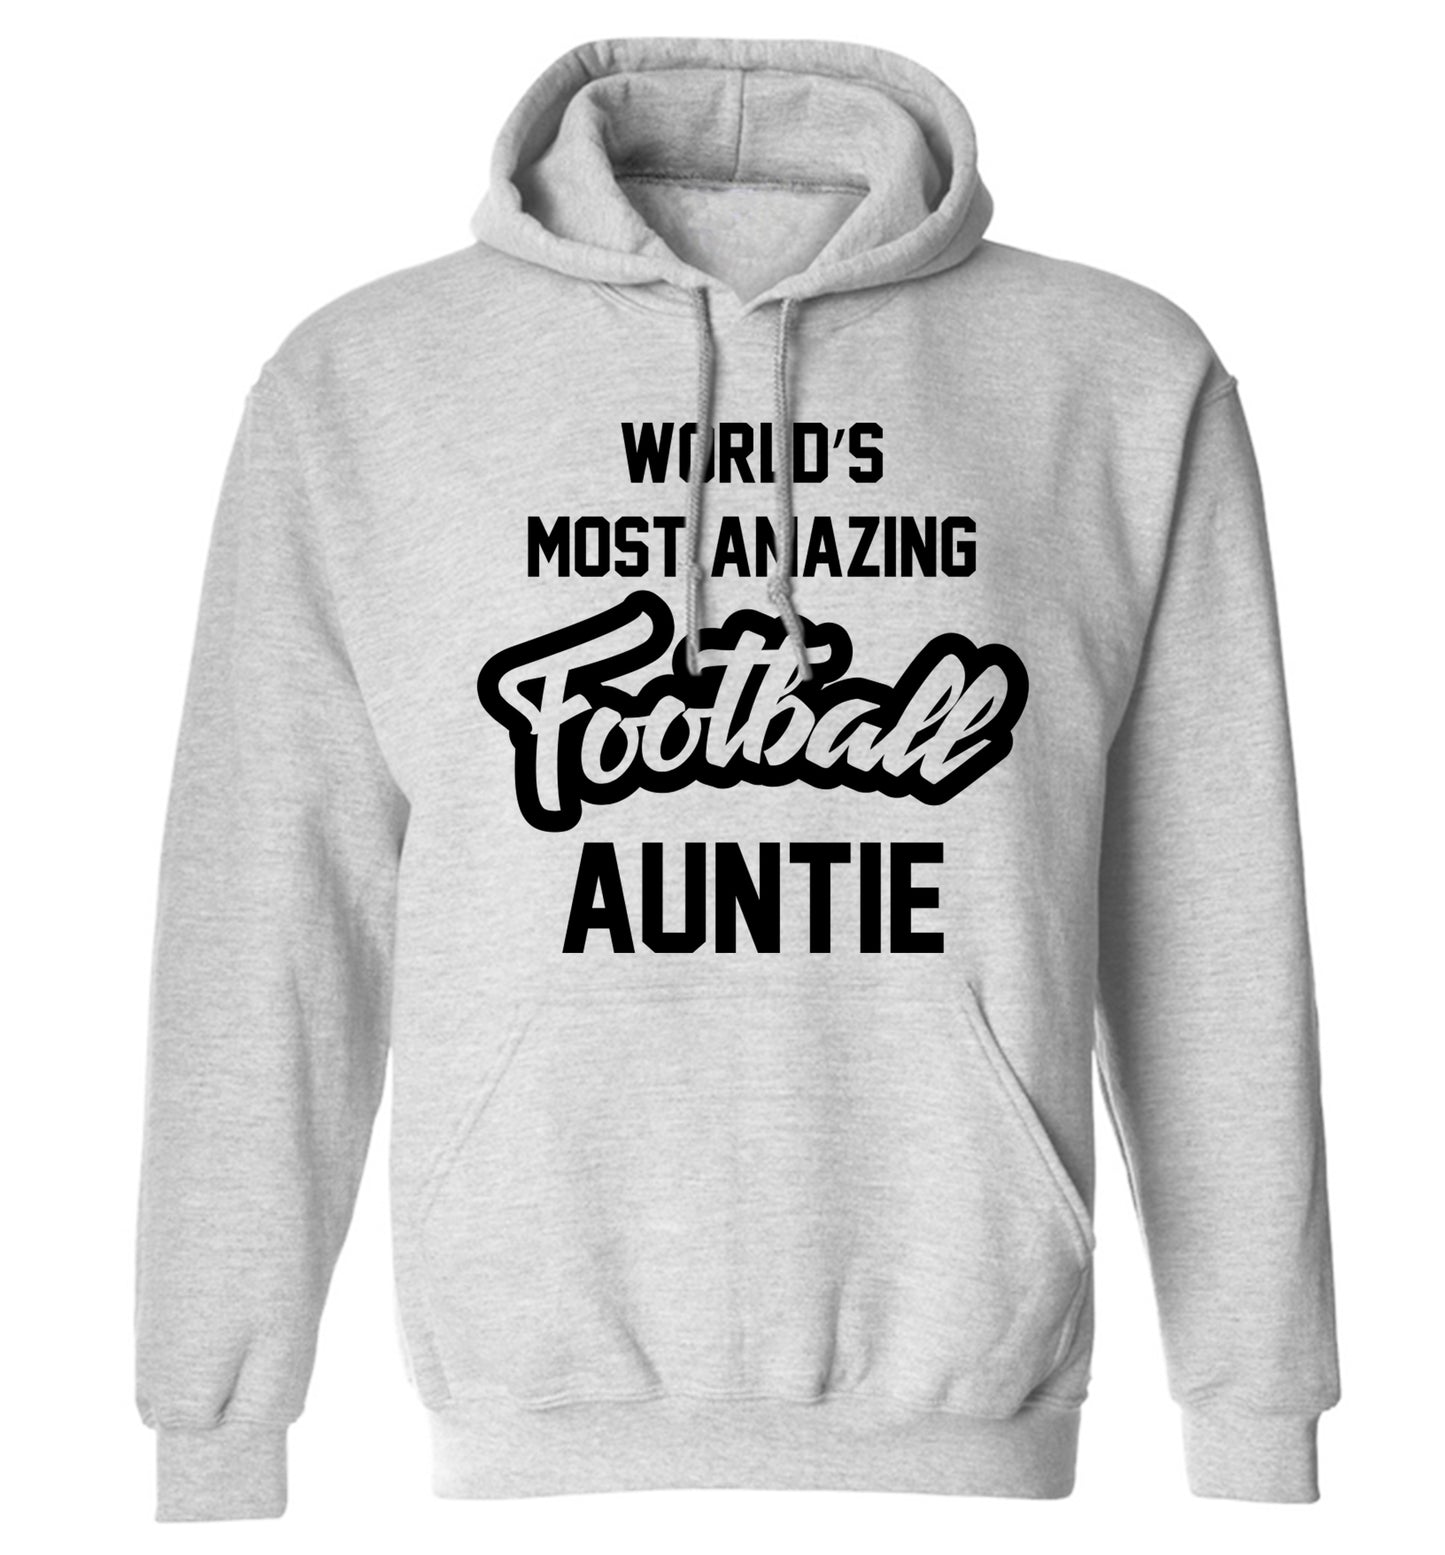 Worlds most amazing football auntie adults unisexgrey hoodie 2XL